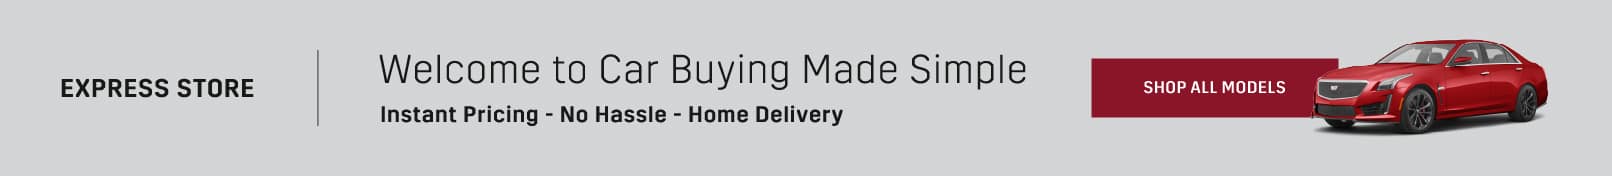 Buy 100% Online Home Delivery Roadster Banner